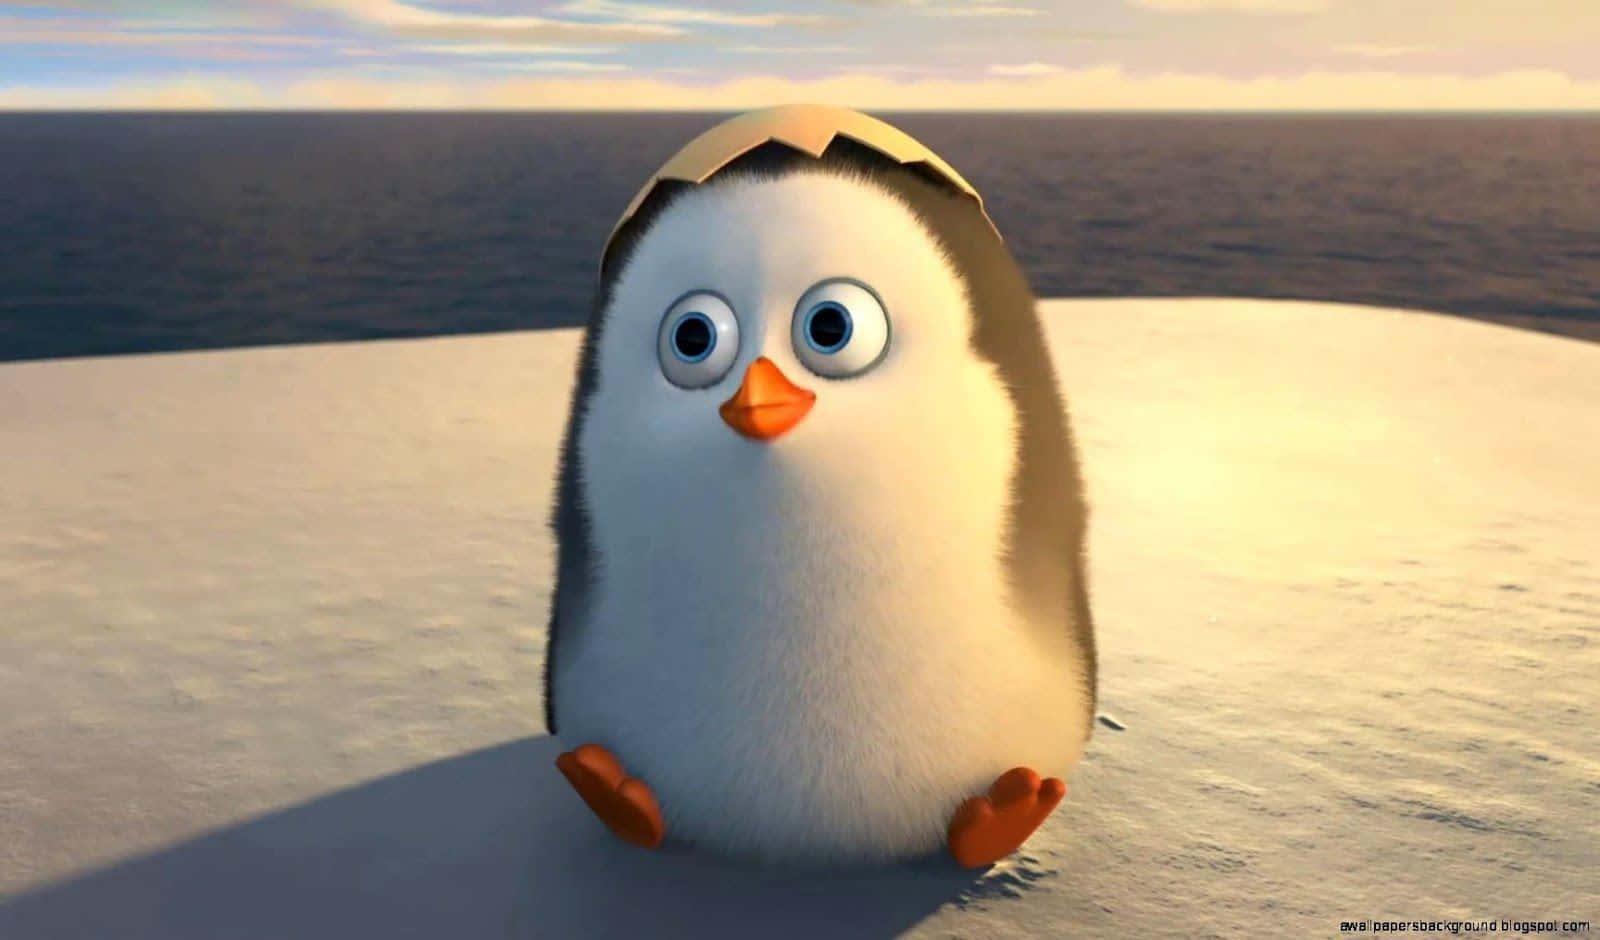 "A Cute Baby Penguin".